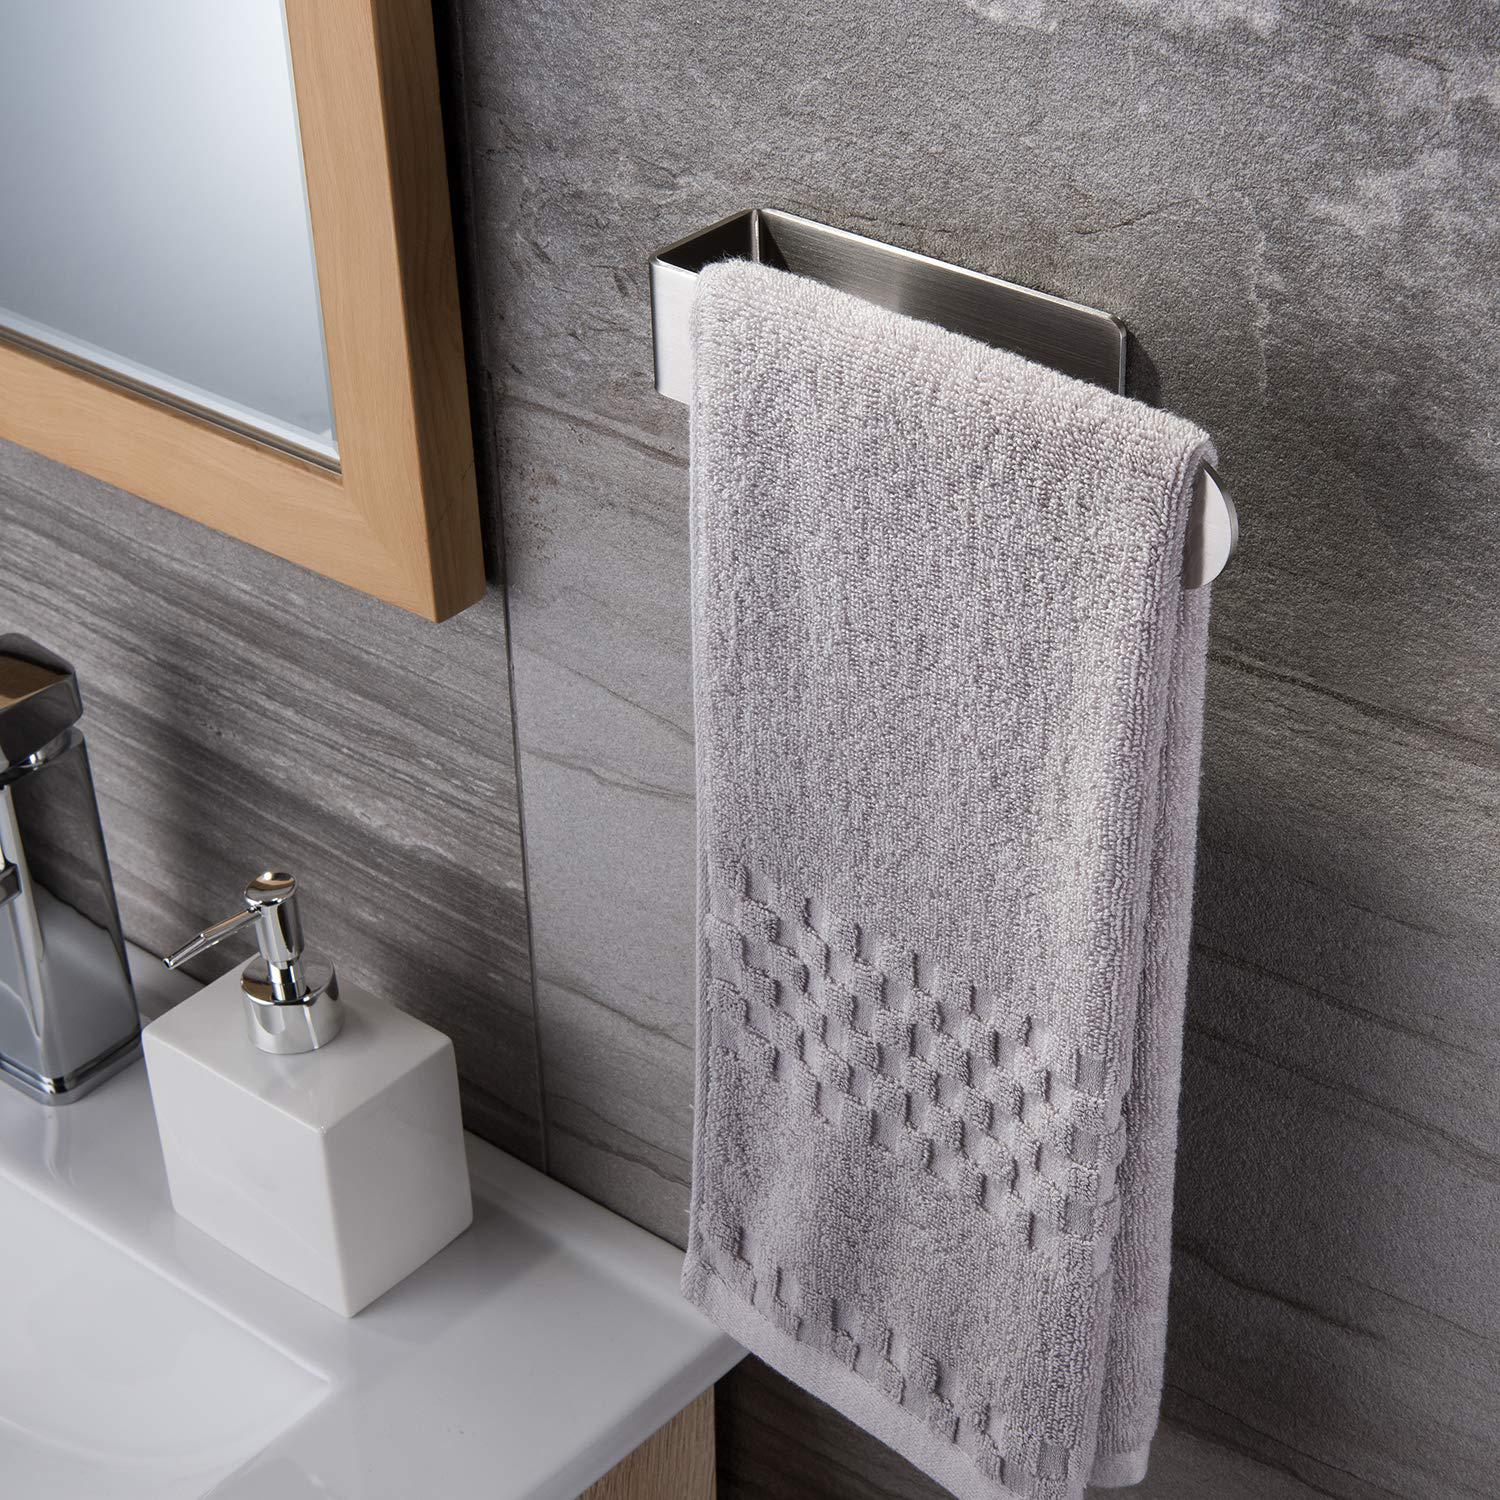 taozun hand towel holder/hand towel ring - self adhesive bathroom towel bar stick on wall, sus 304 stainless steel brushed